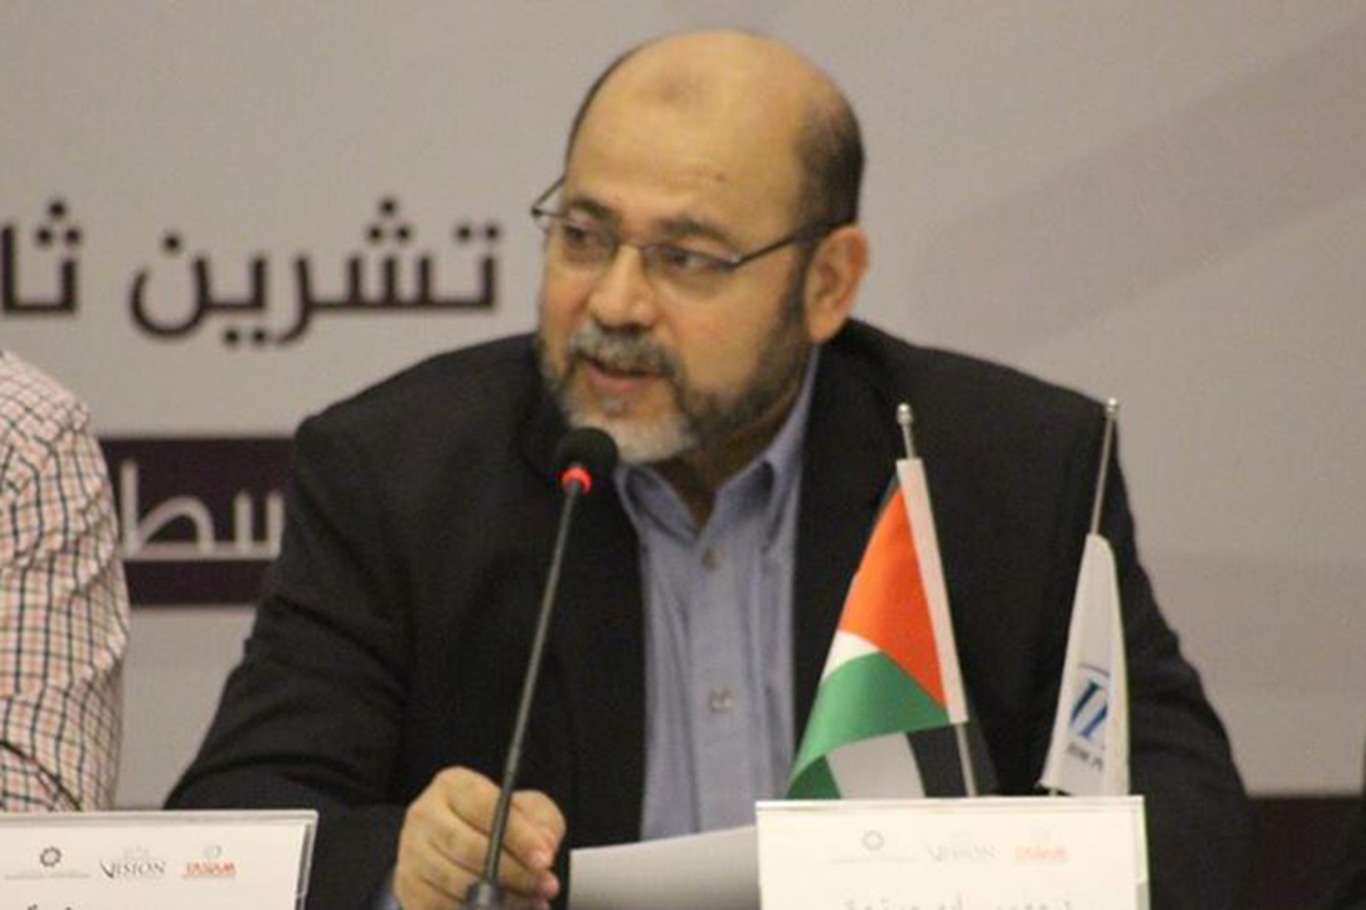 Hamas: Next prisoner-exchange deal will release large number of prisoners